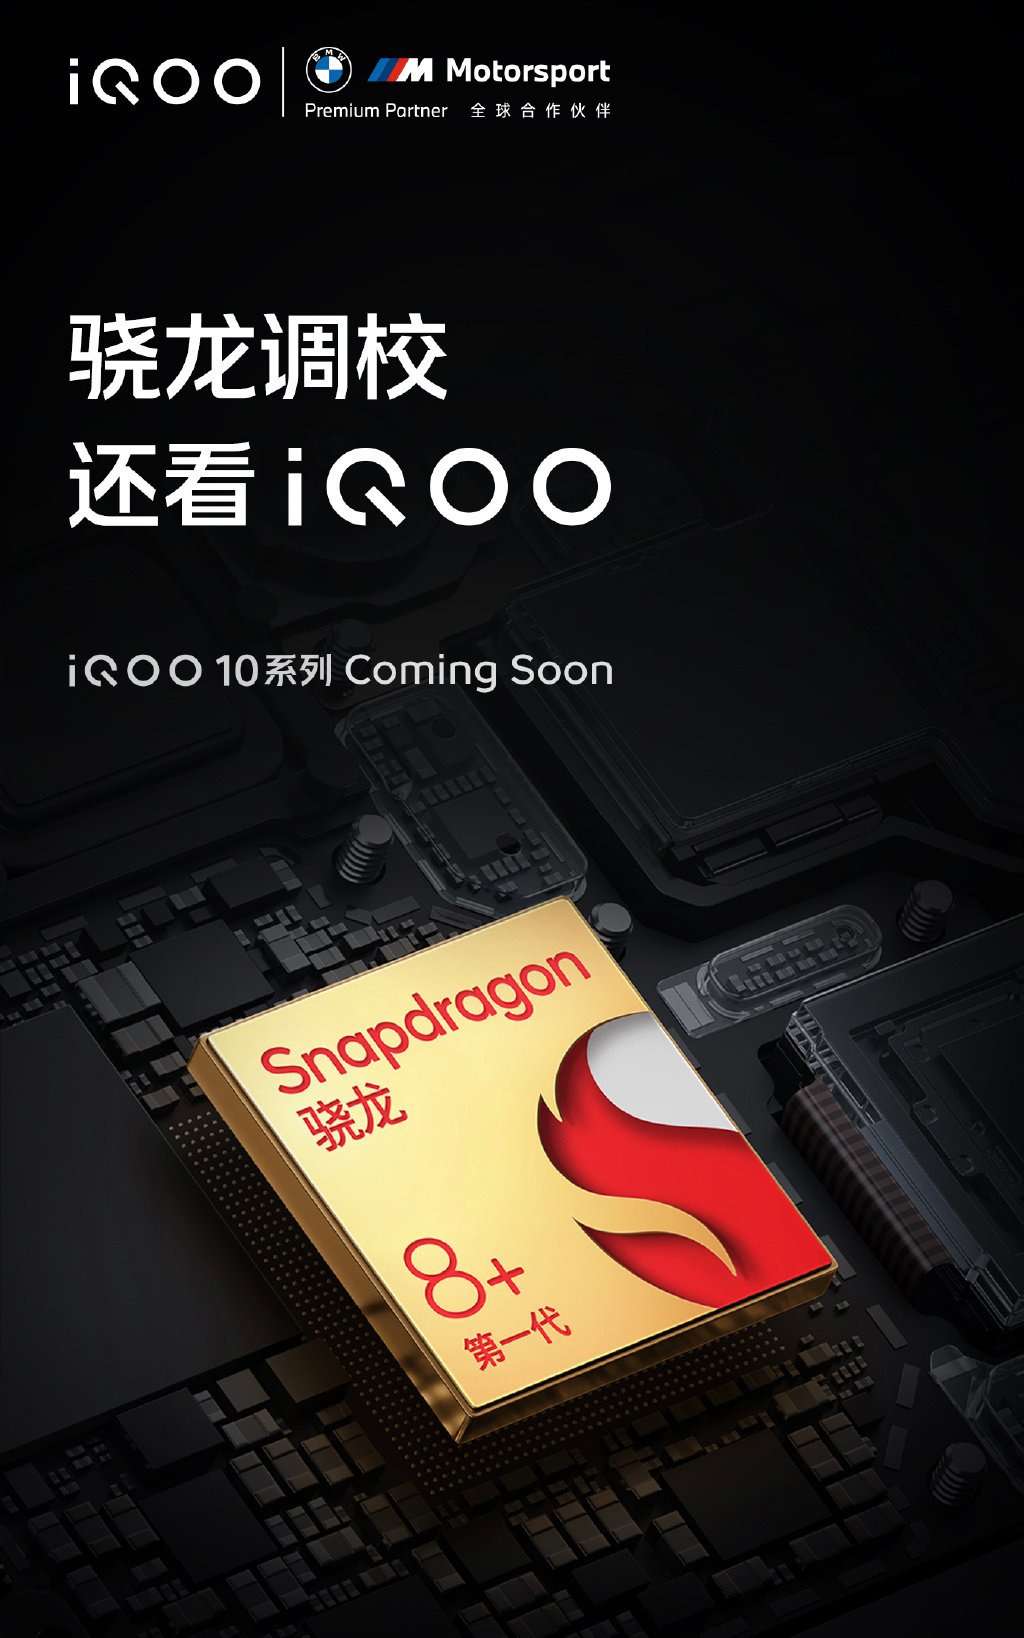 iQOO 10 series coming soon